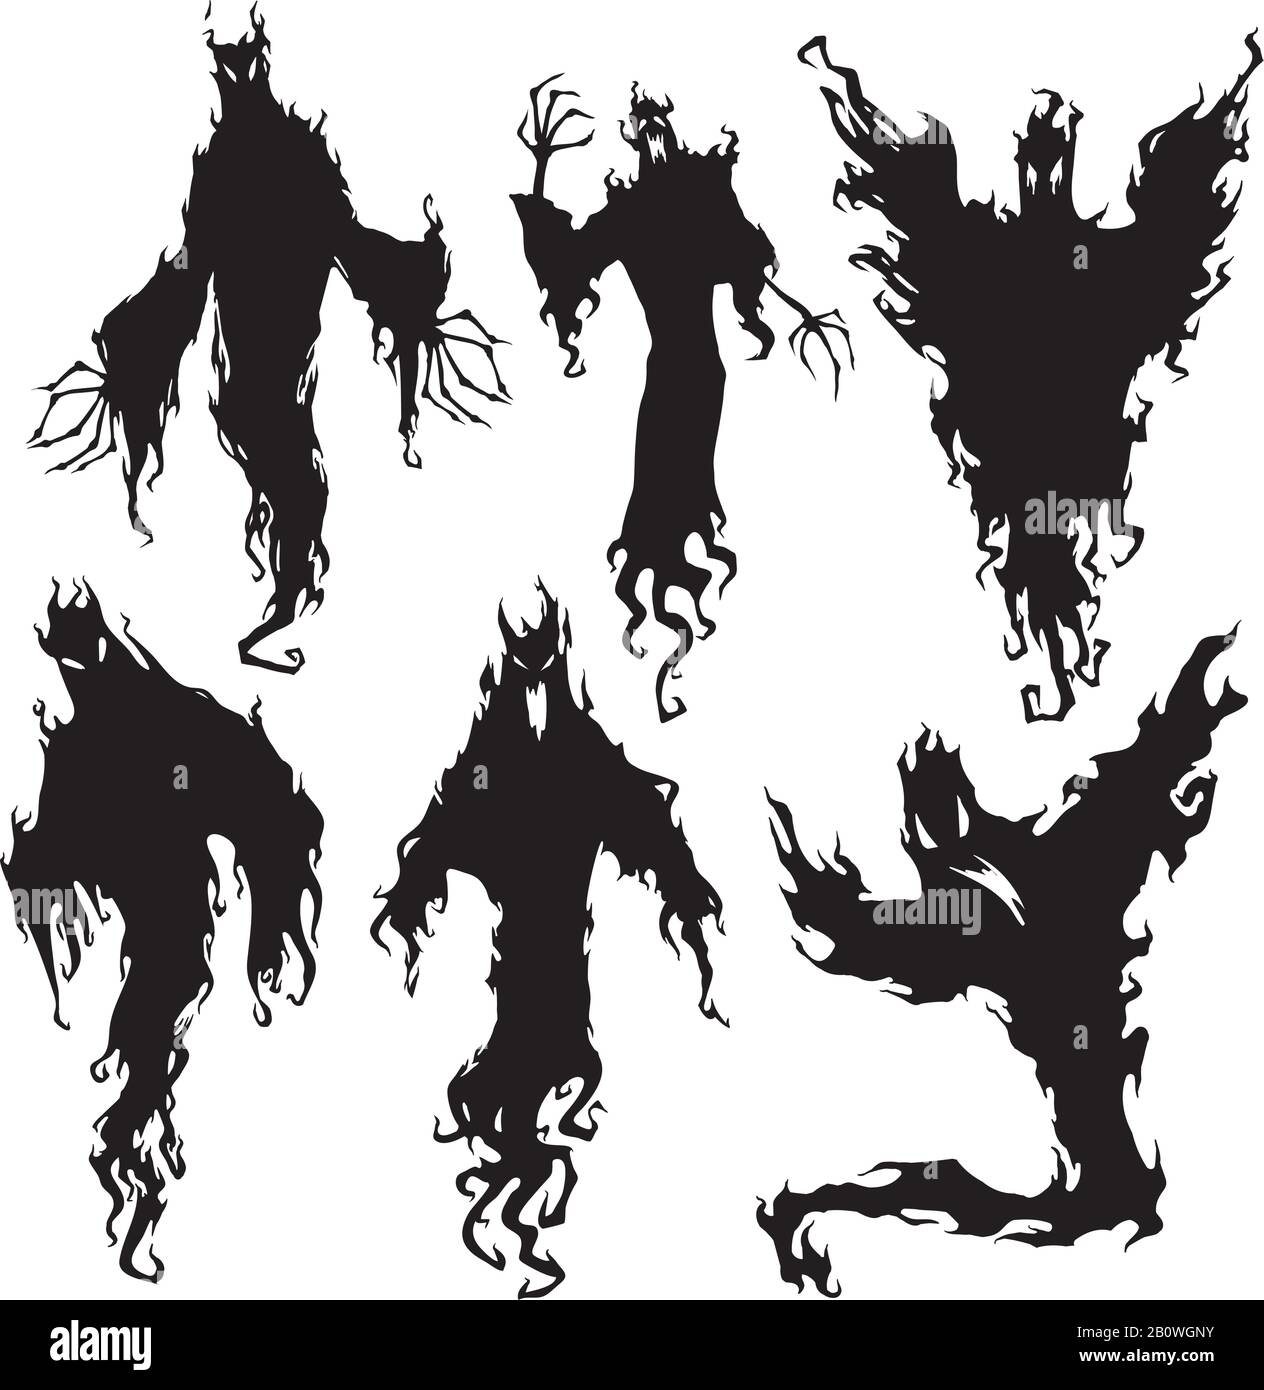 Evil spirit silhouette. Halloween dark night devil, nightmare demon or ghost silhouettes. Flying metaphysical vector illustration Stock Vector